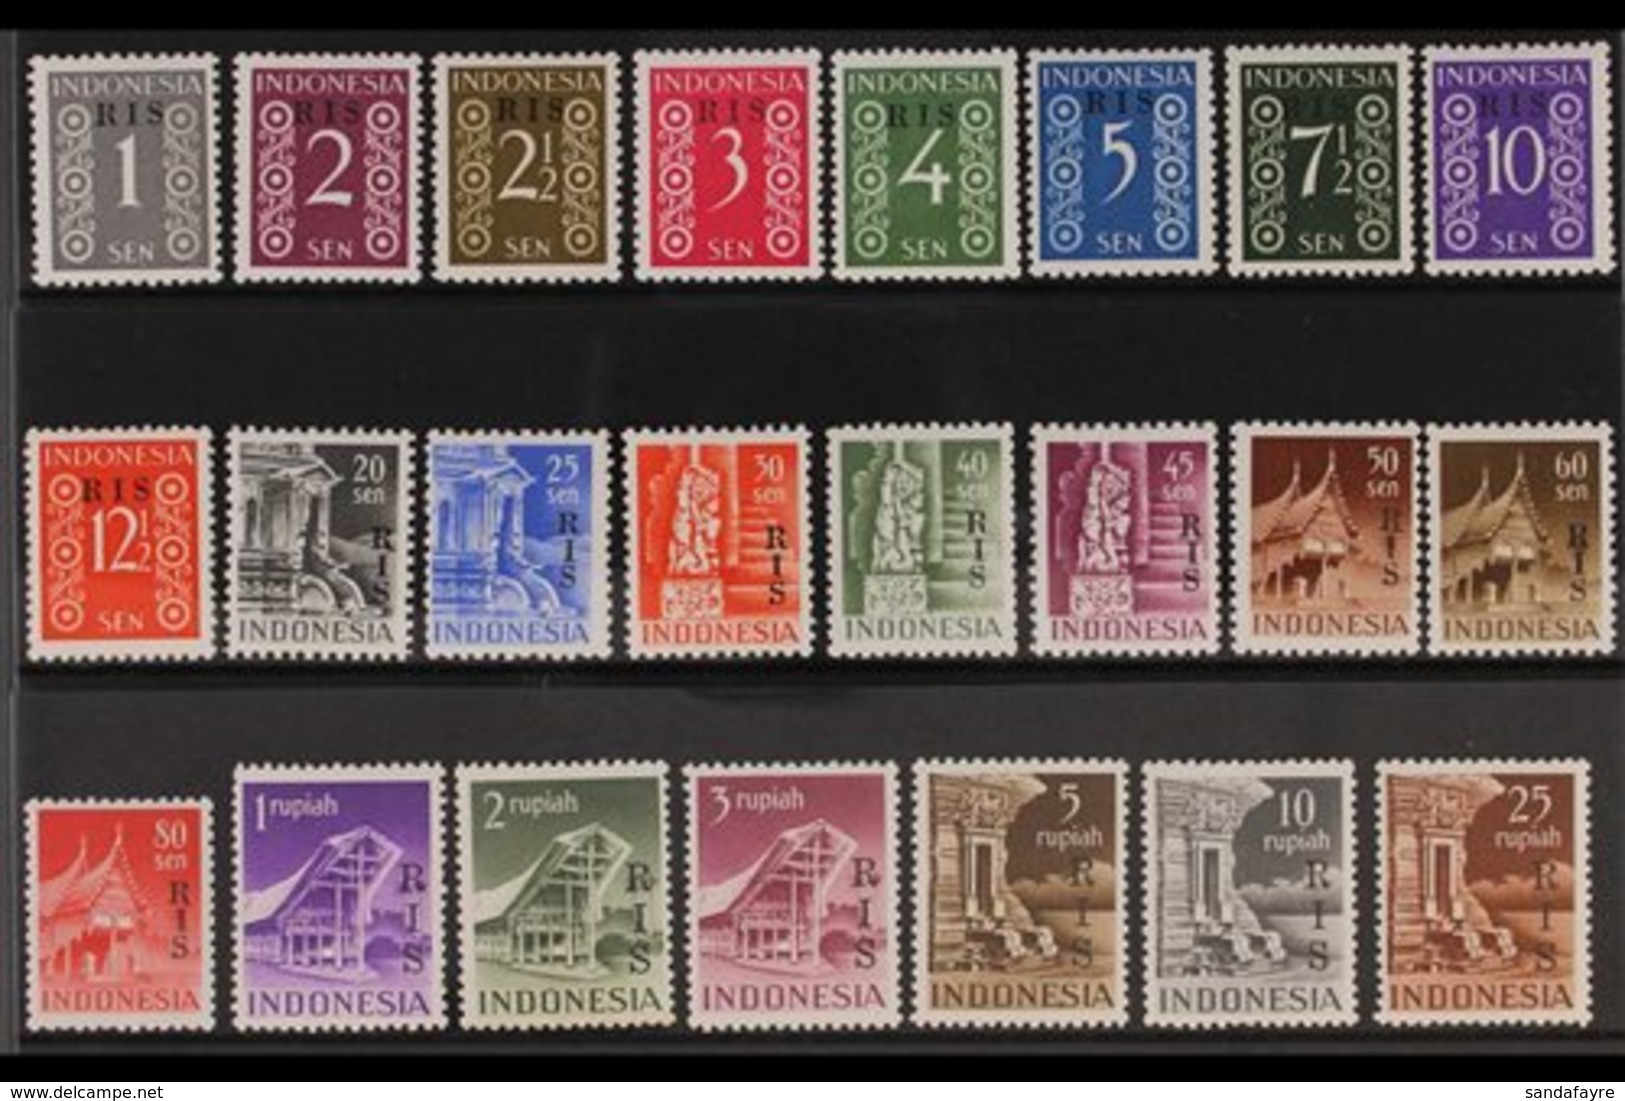 1950  Netherland Indies "R I S" Overprinted Complete Set, SG 579/601, Scott 335/58, Never Hinged Mint (23 Stamps) For Mo - Indonésie